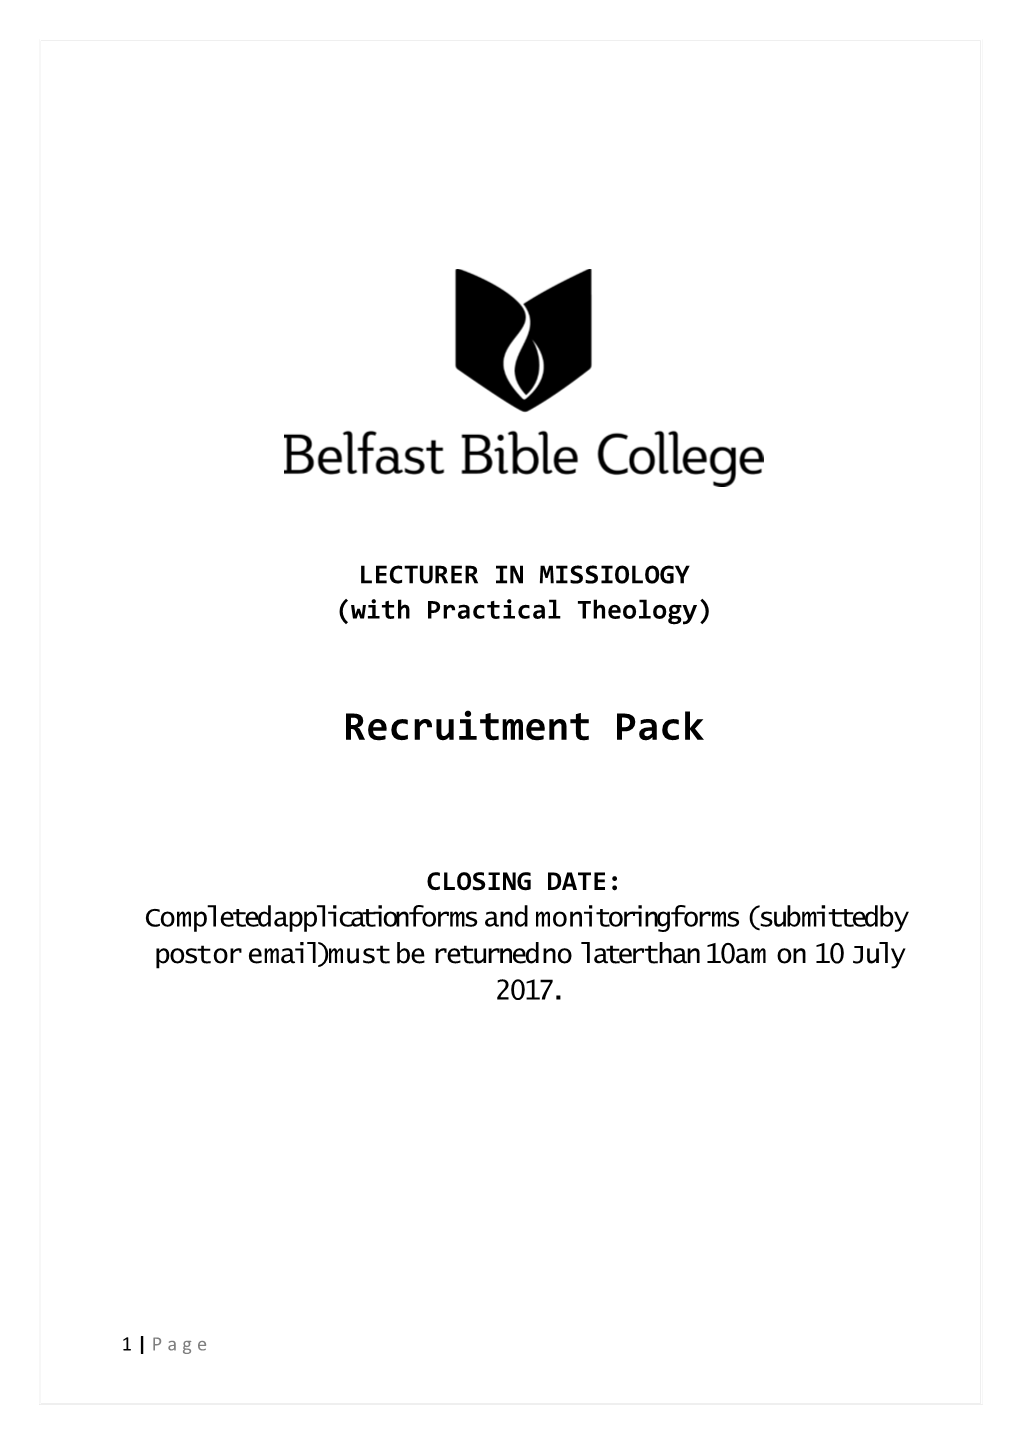 Recruitment Pack Template - Jan 09